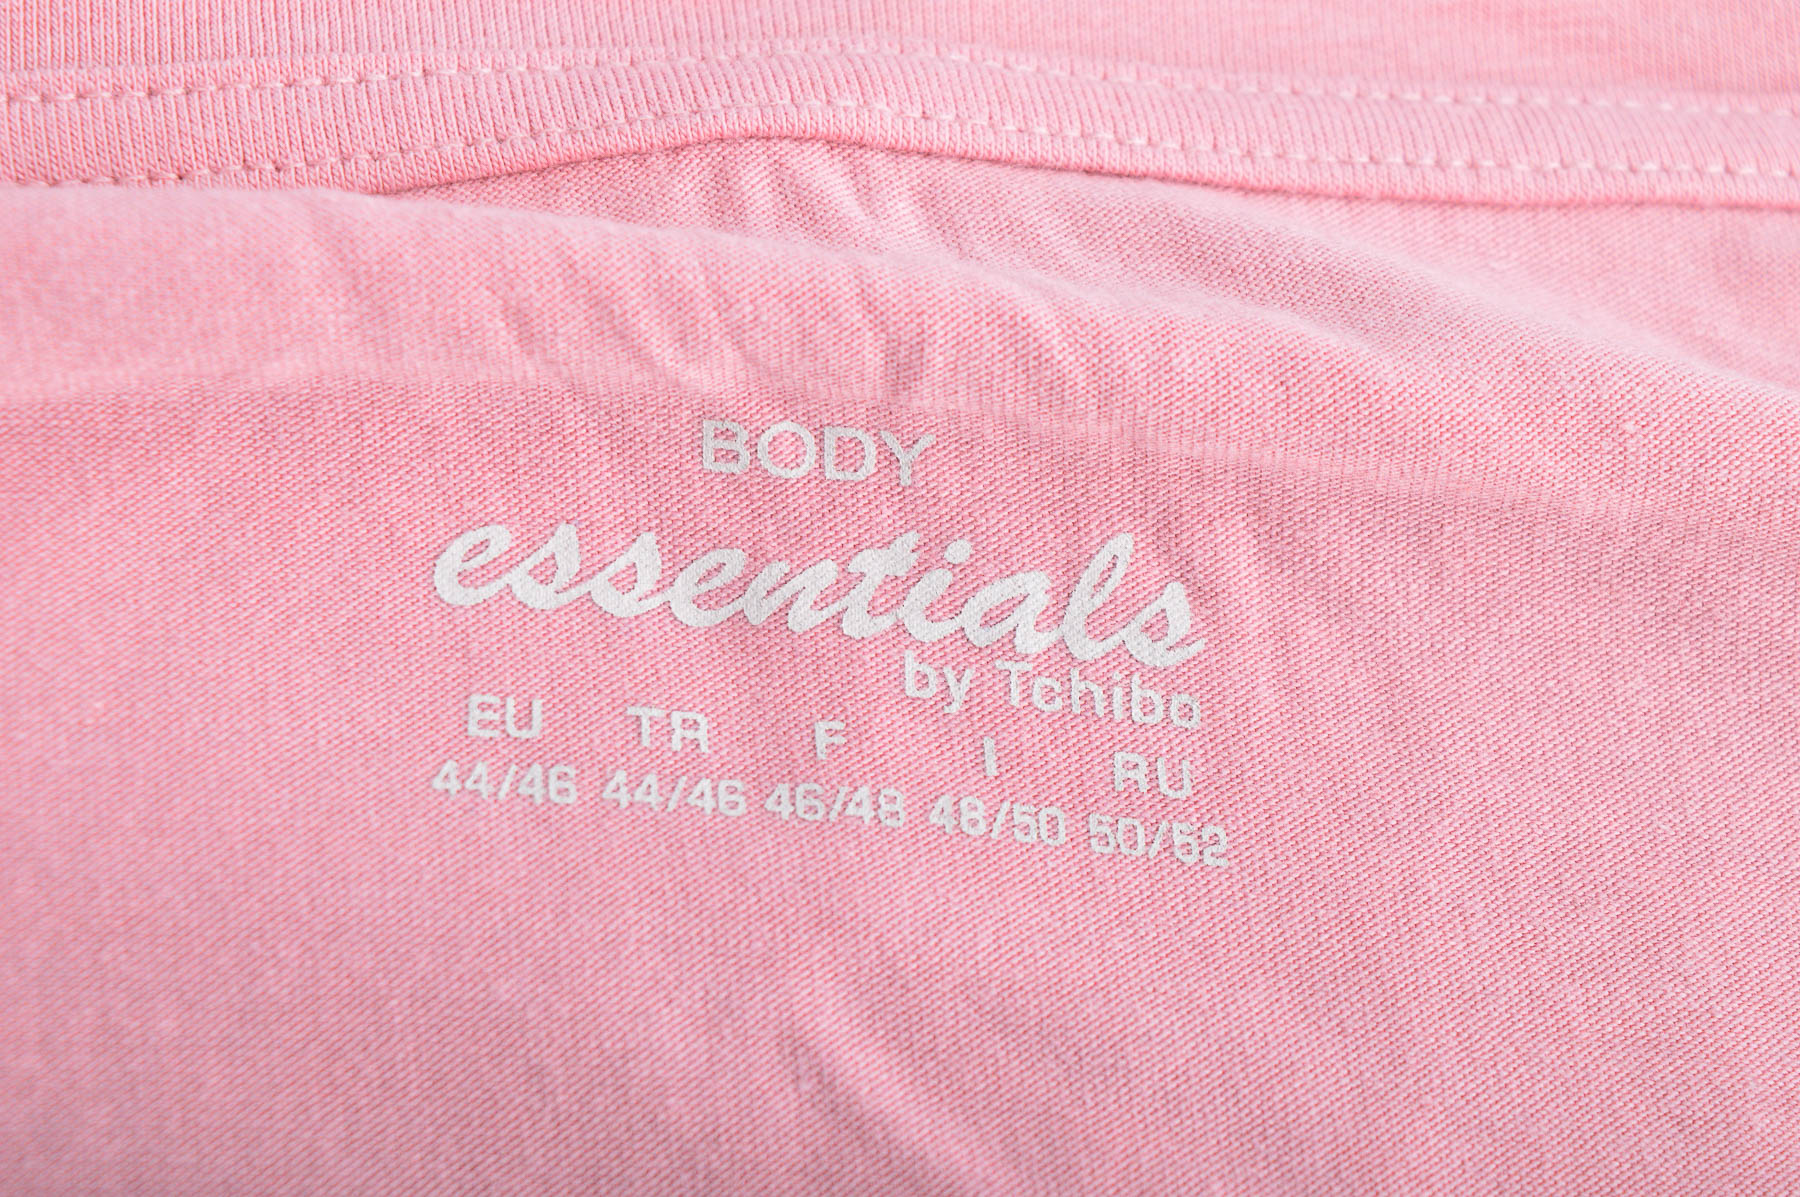 Women's blouse - Essentials by Tchibo - 2